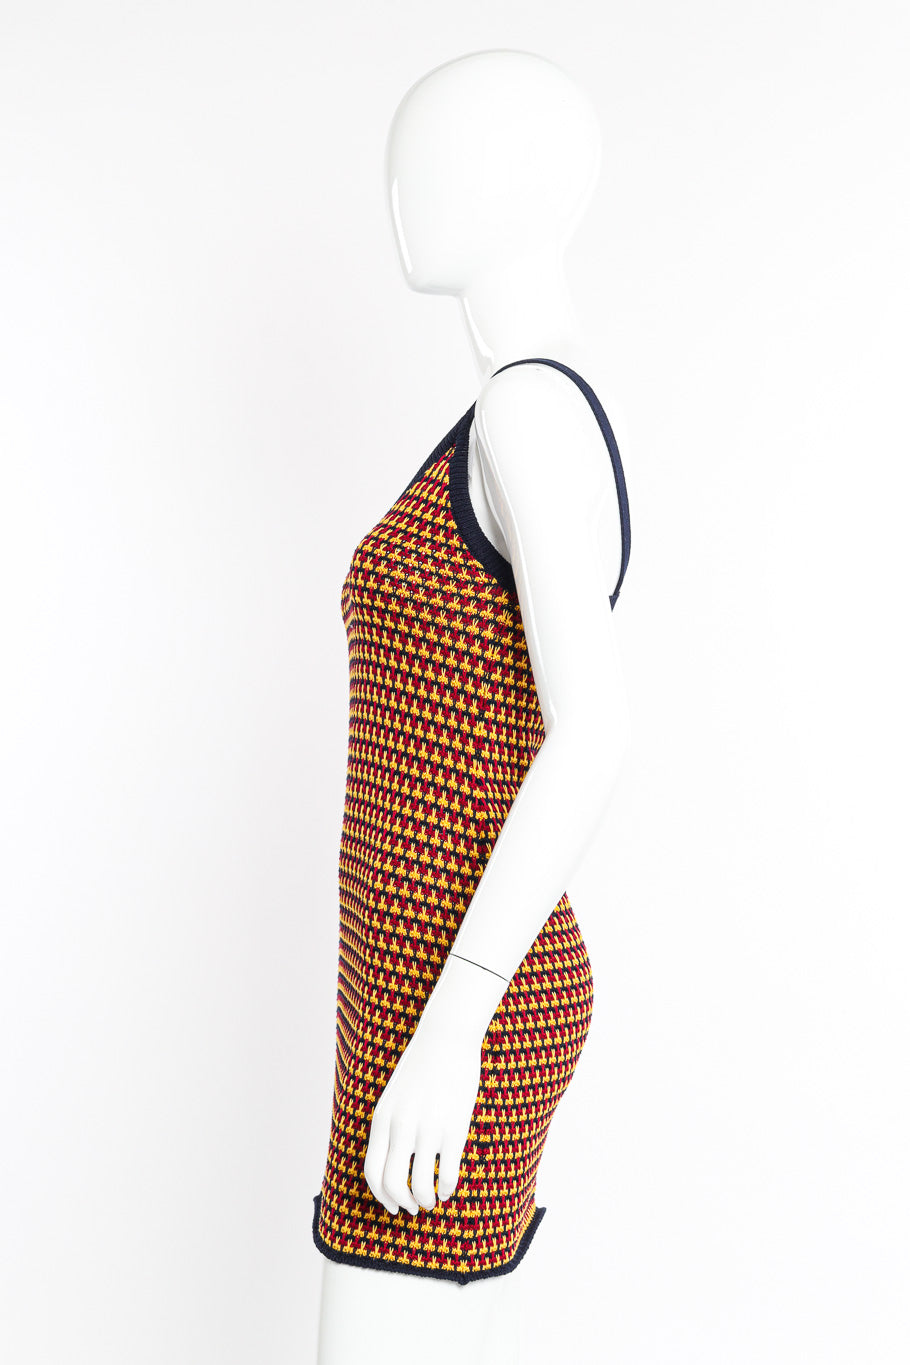 Miu Miu Scissor Knit Tank Dress side view on mannequin @Recessla